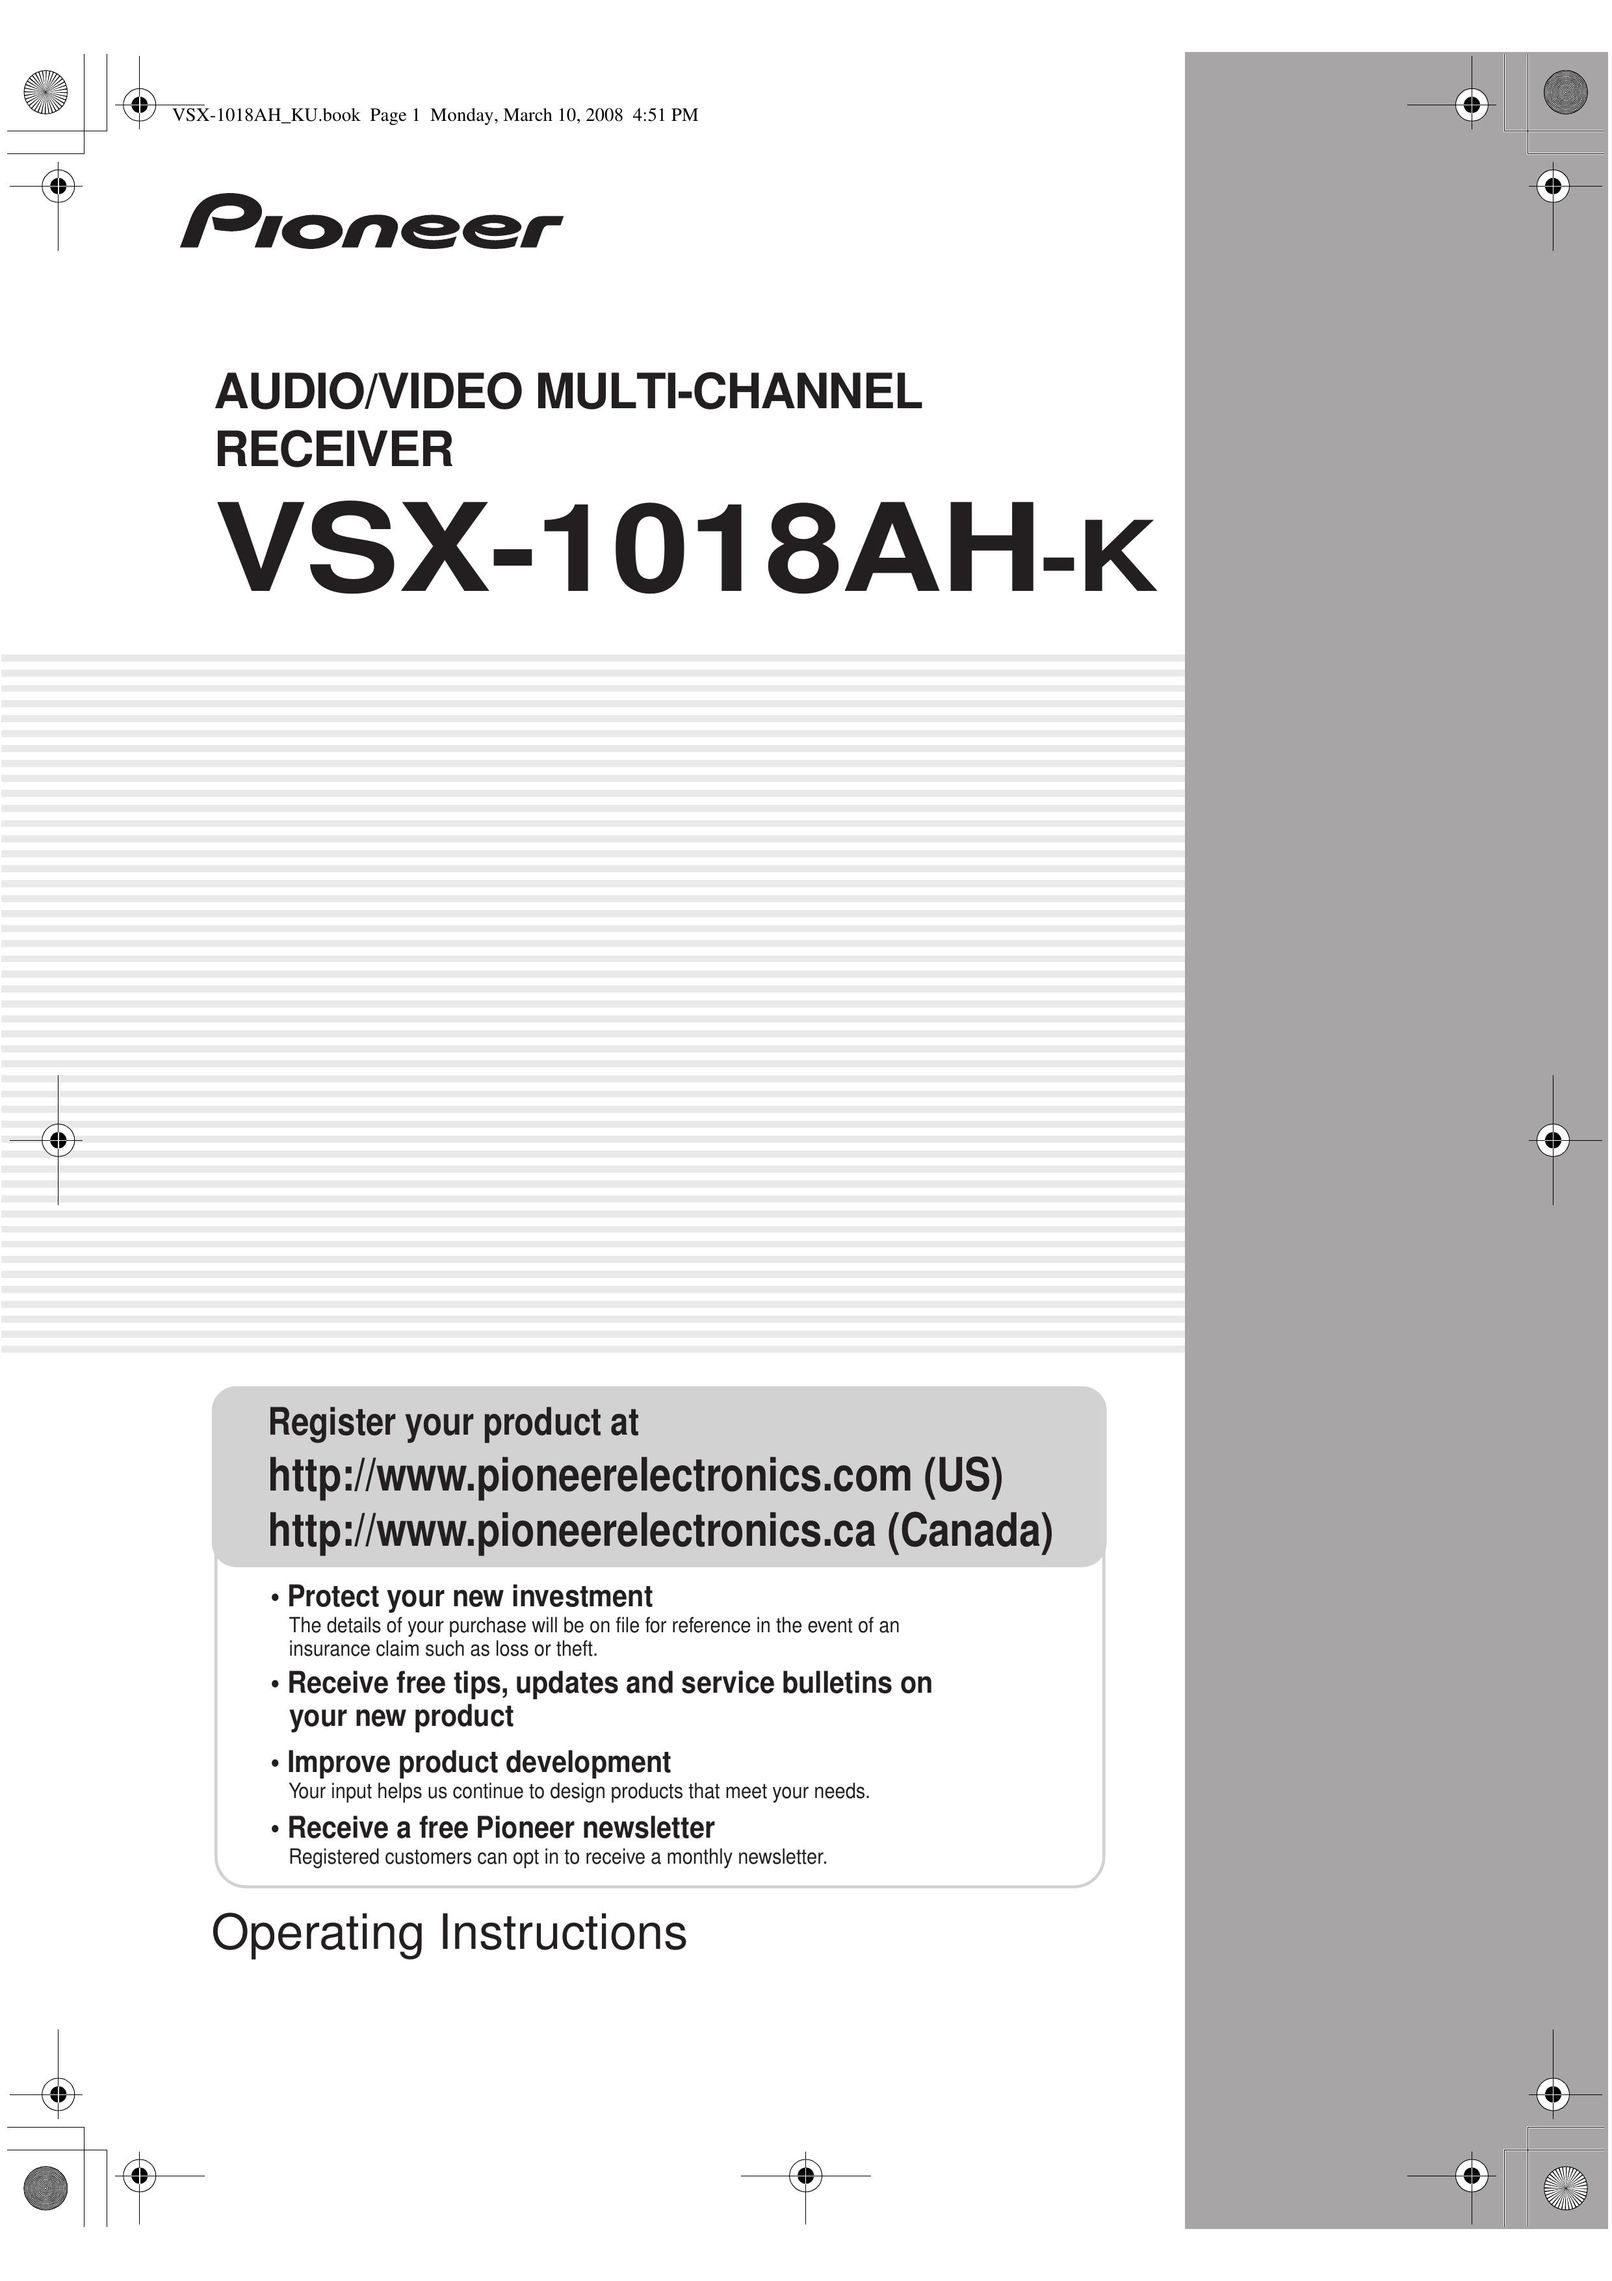 Pioneer VSX-1018AH-K TV Receiver User Manual